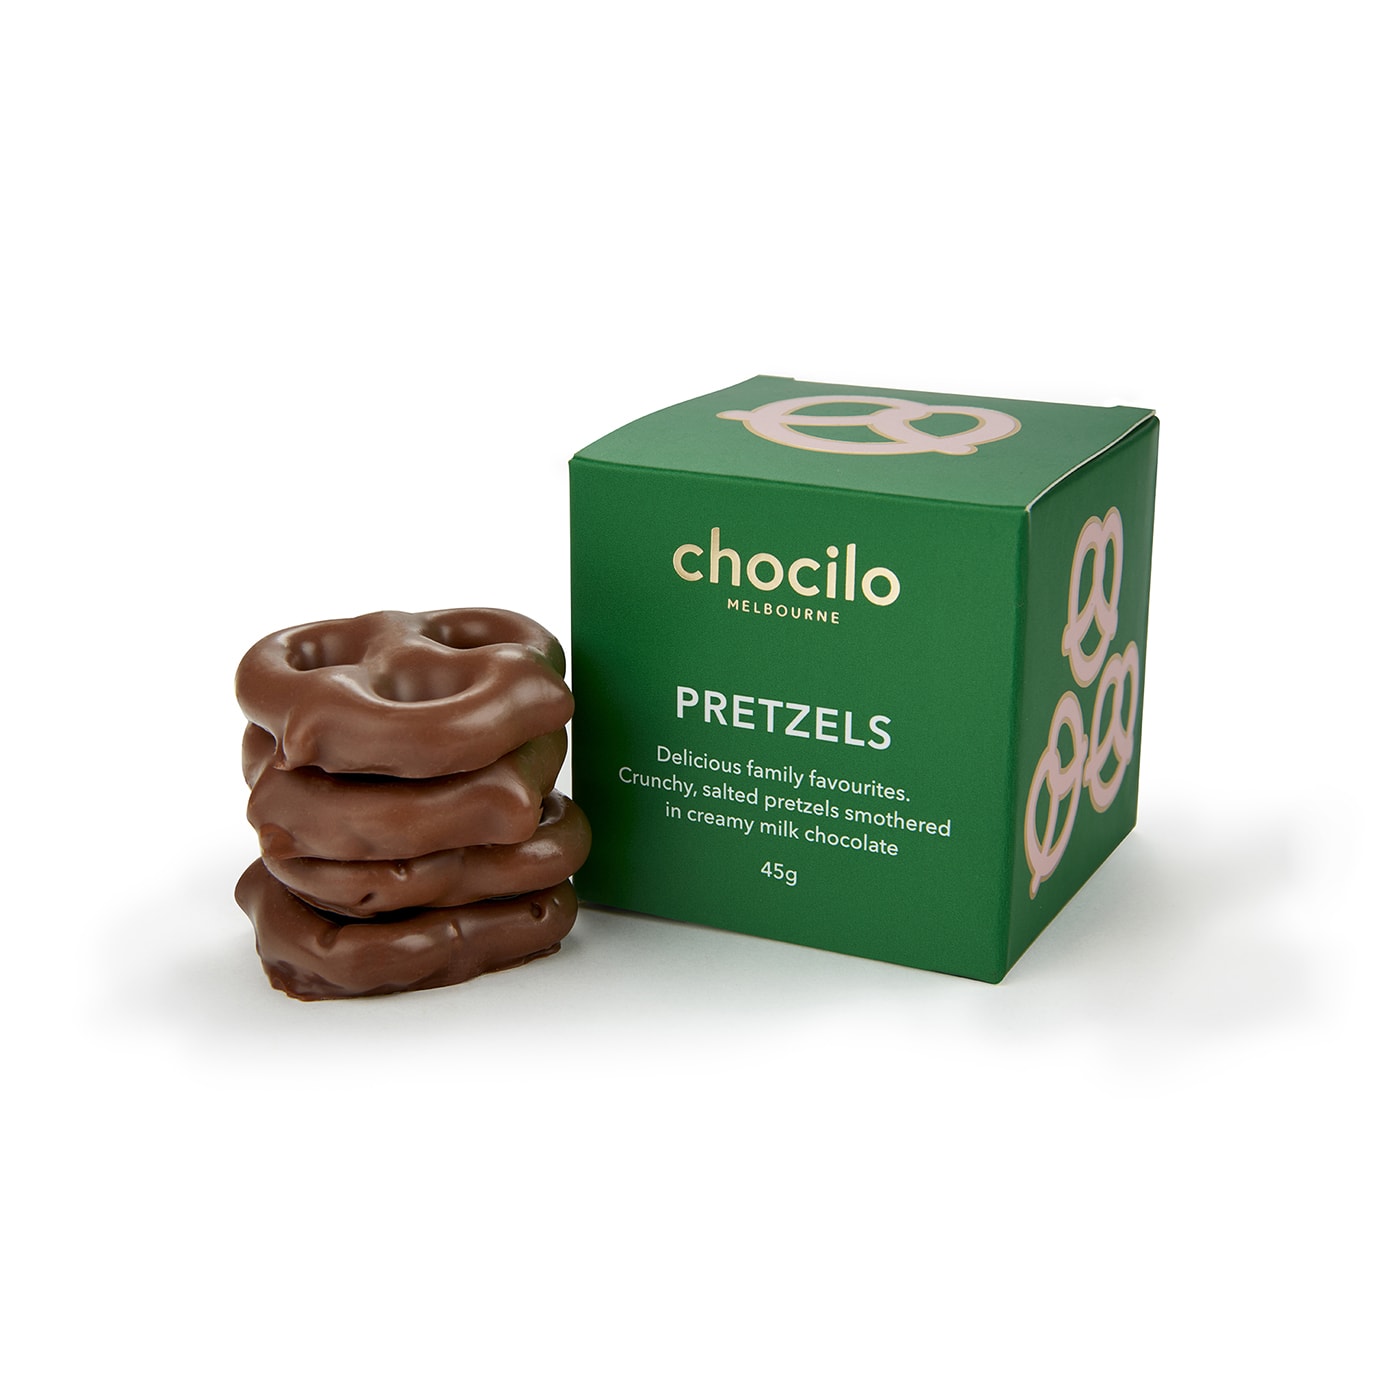 Chocilo Melbourne Milk Chocolate Pretzels Gift Cube